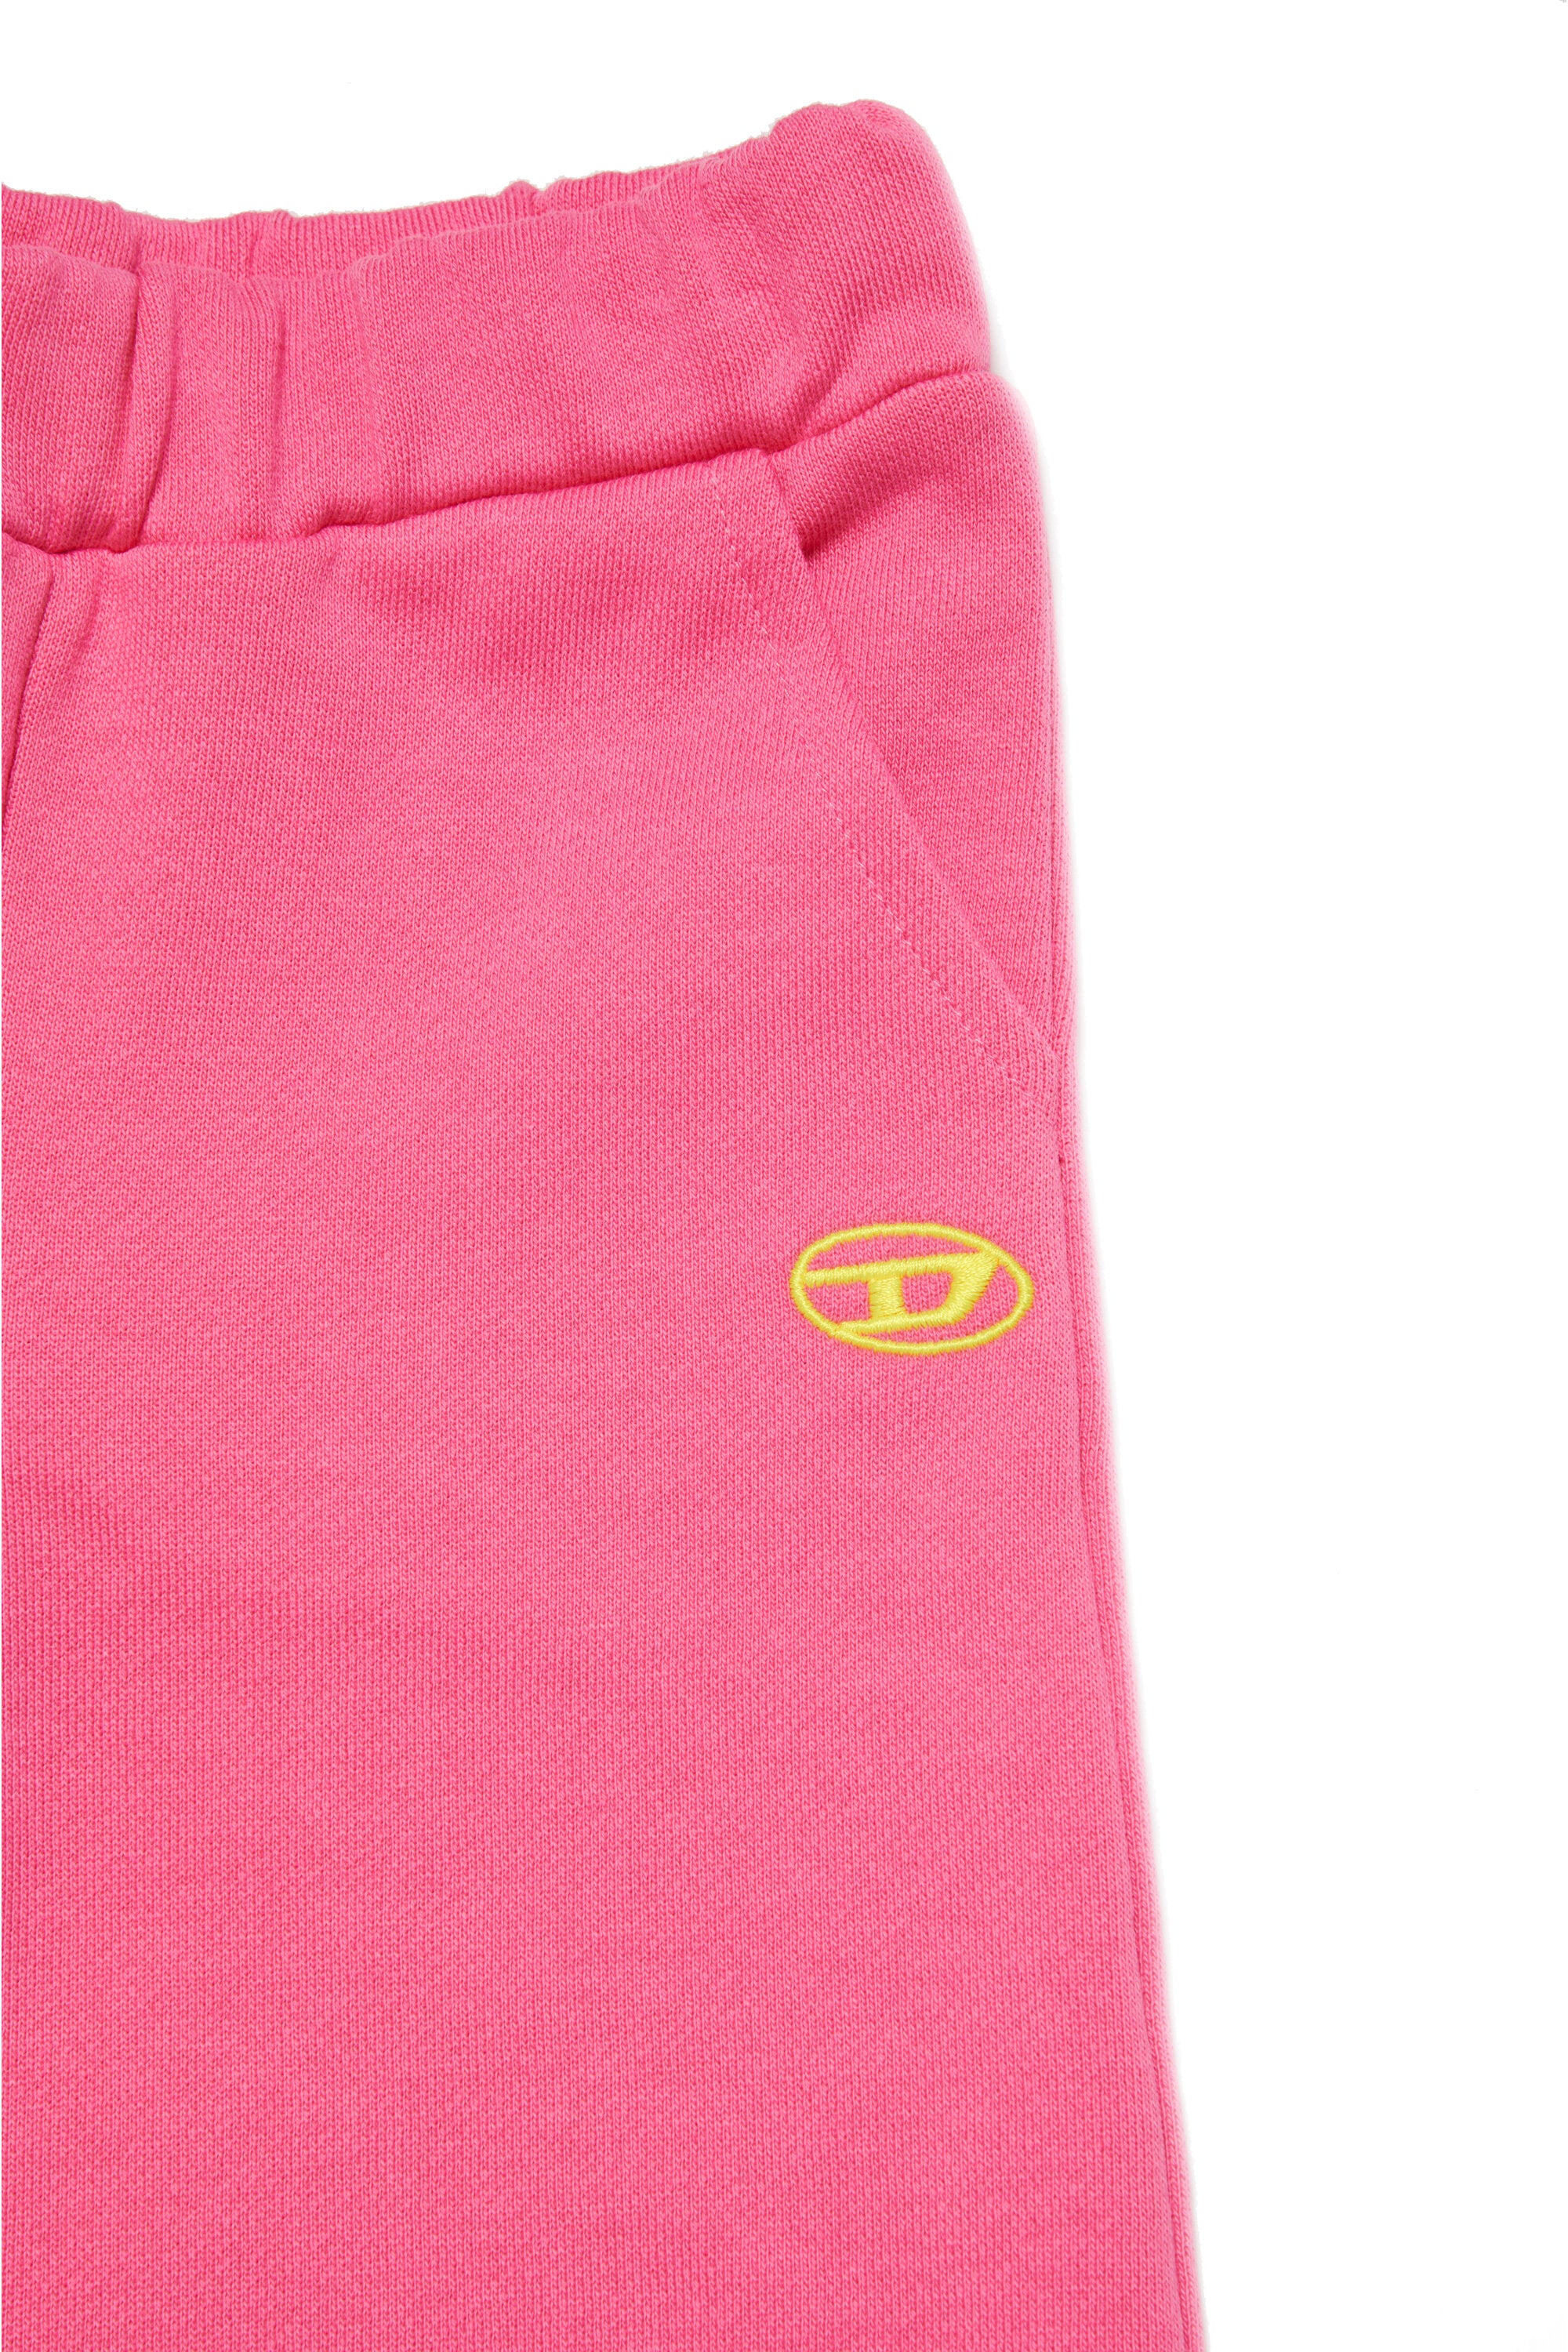 Pantaloni in felpa con logo Oval D